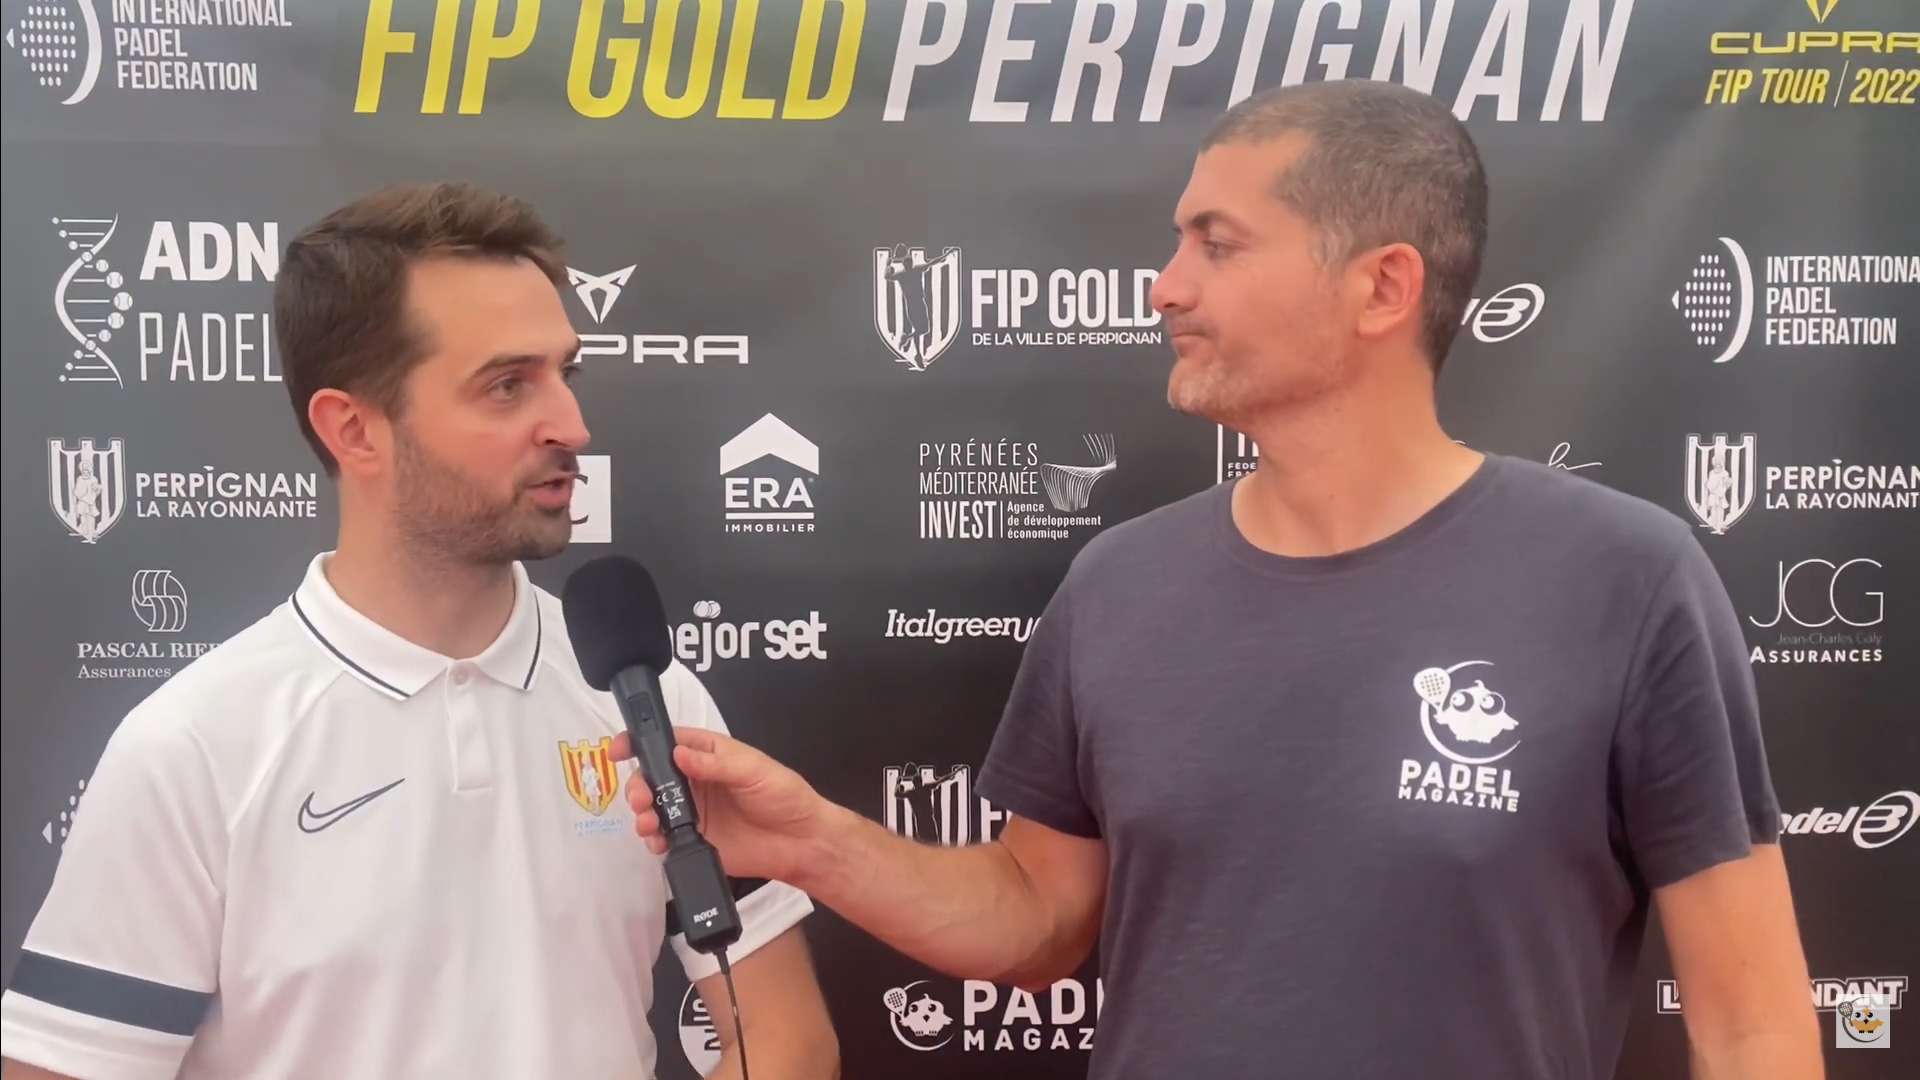 Sebastien Ménard intervjuar FIP Gold Perpignan 2022